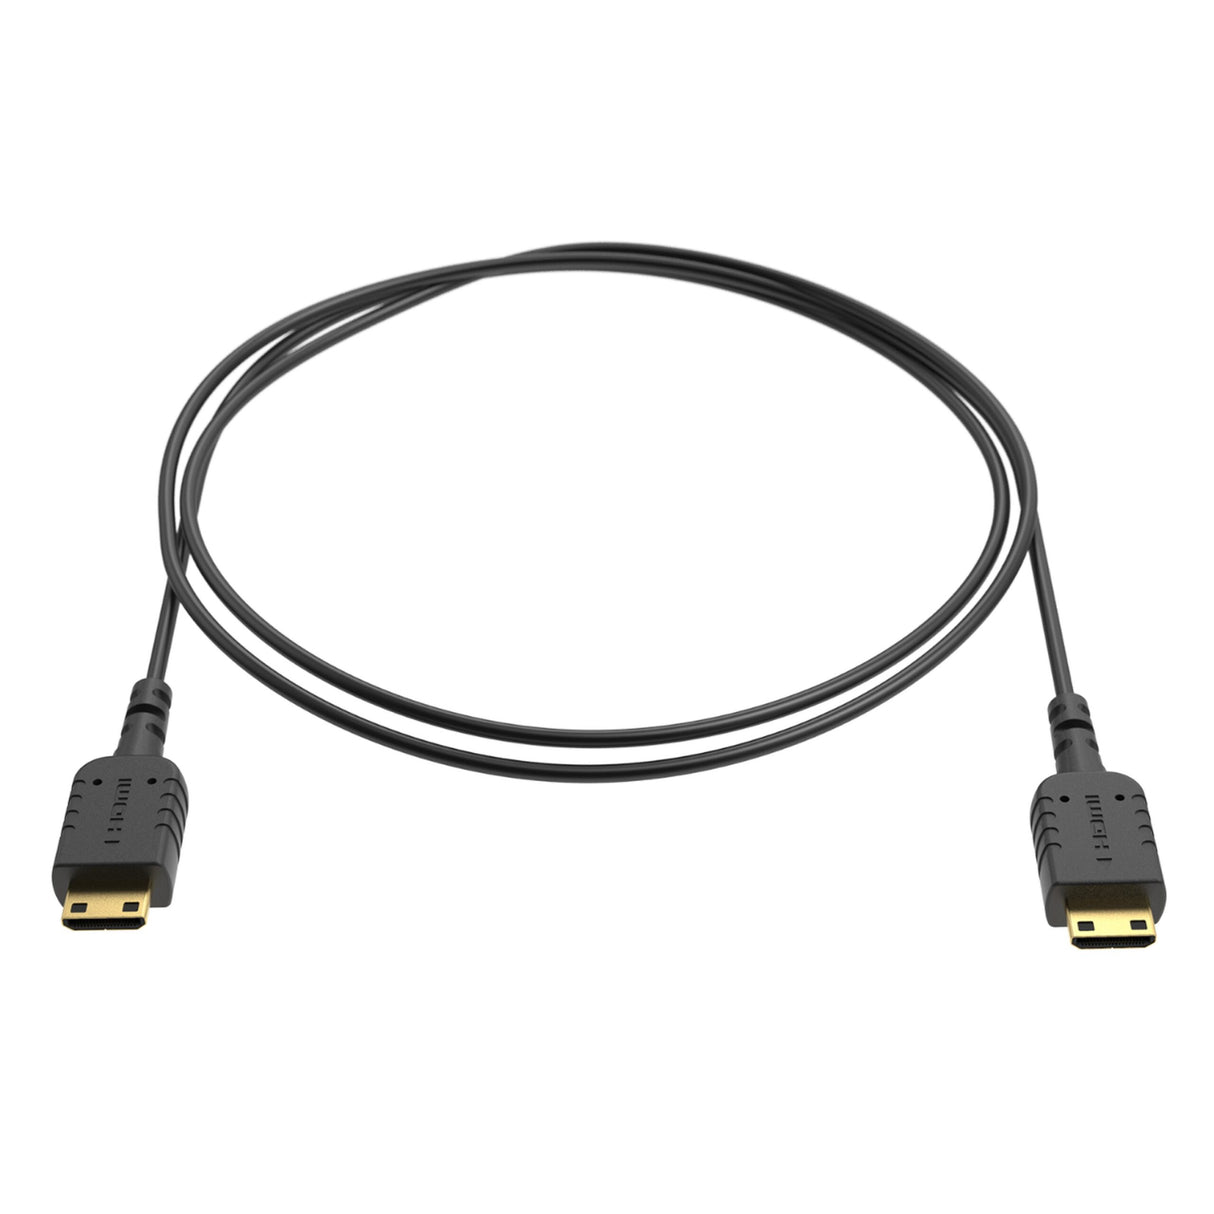 8Sinn eXtraThin HDMI Mini to HDMI Mini Cable, 80 Centimeters